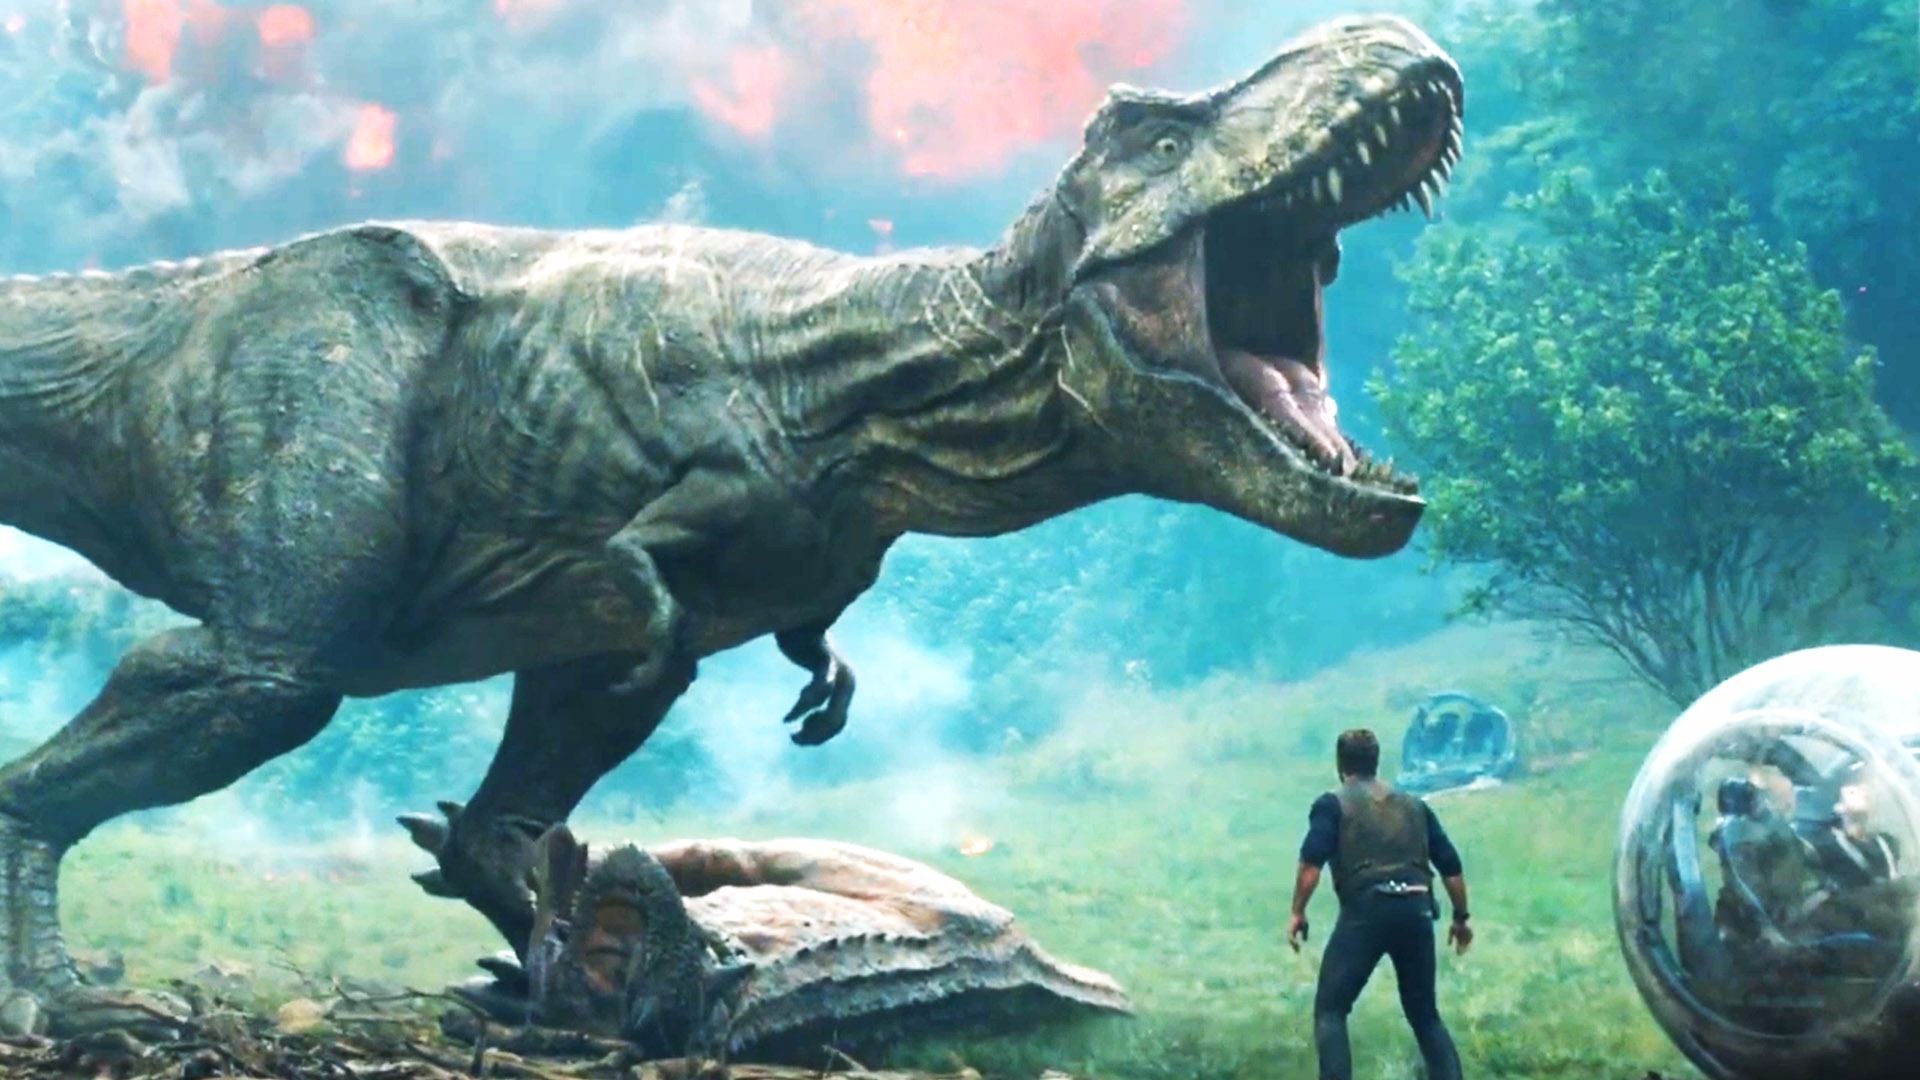 Jurassic World: Fallen Kingdom download the new for ios